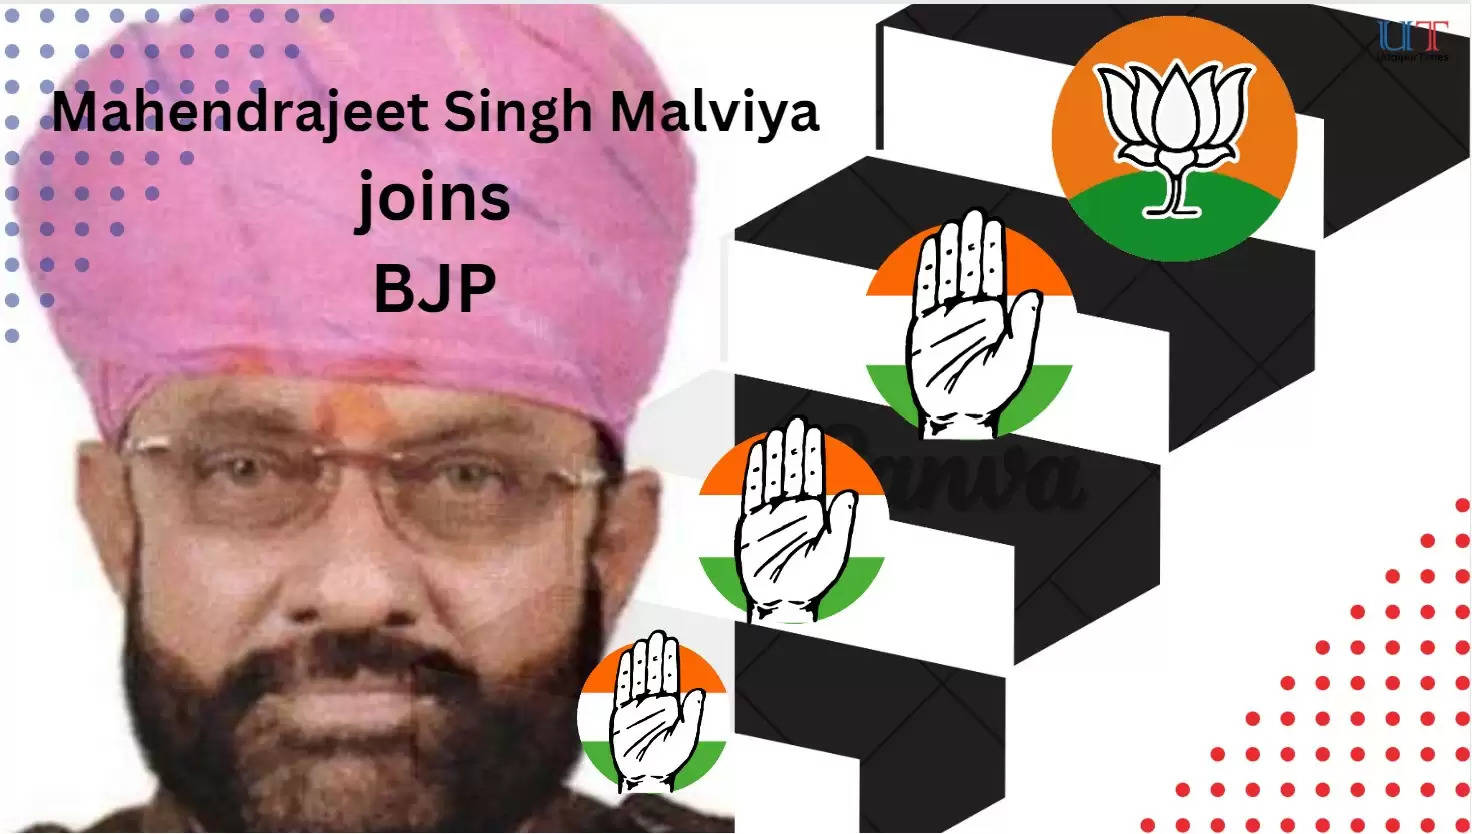 Mahendrajeet Singh Malviya Joins BJP after 40 year stint with Congress